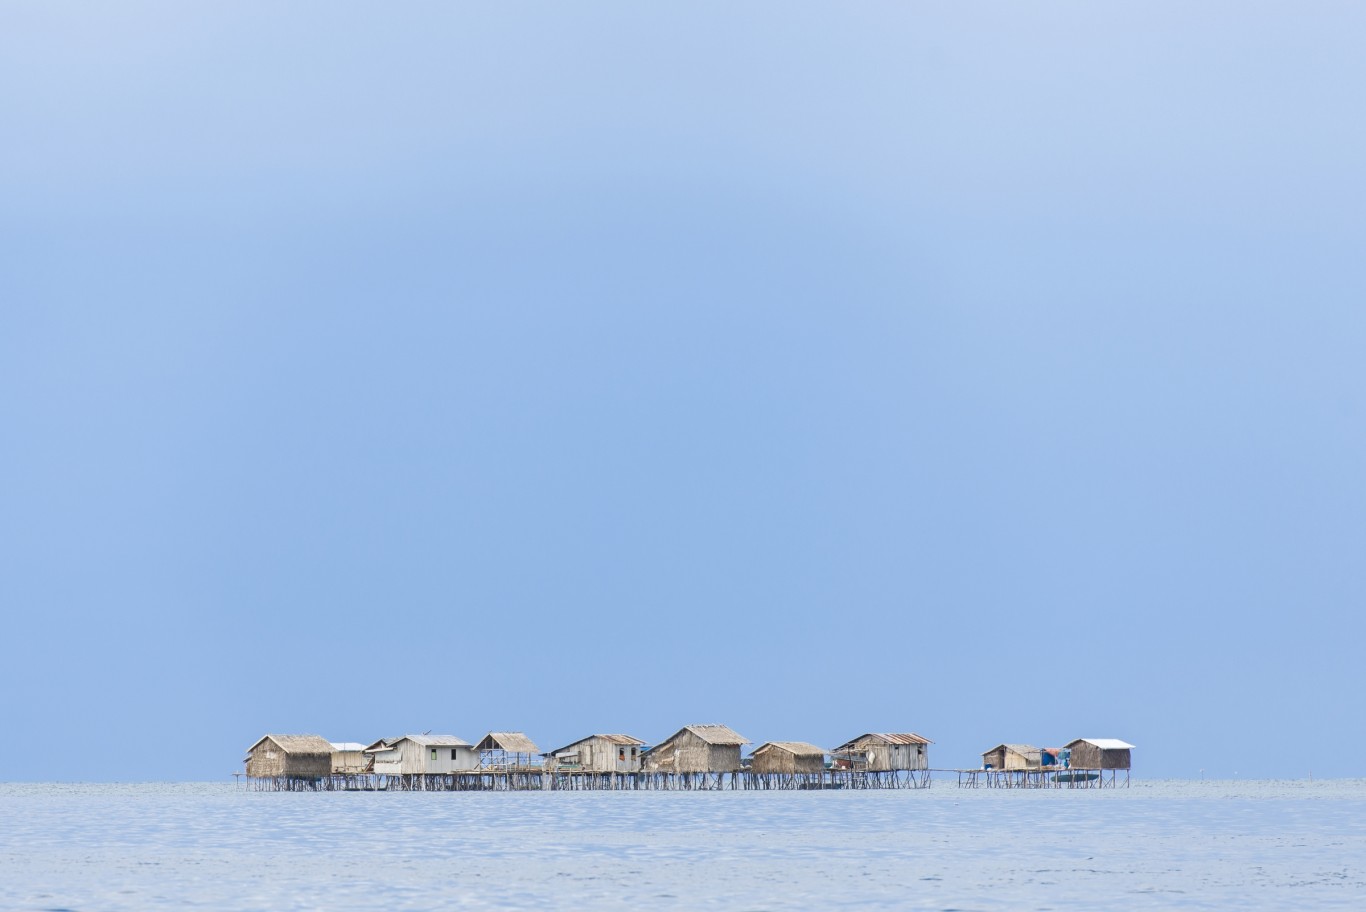 A typical Sama-Bajau community with stilt houses over the coastal shallows of Tawi-Tawi